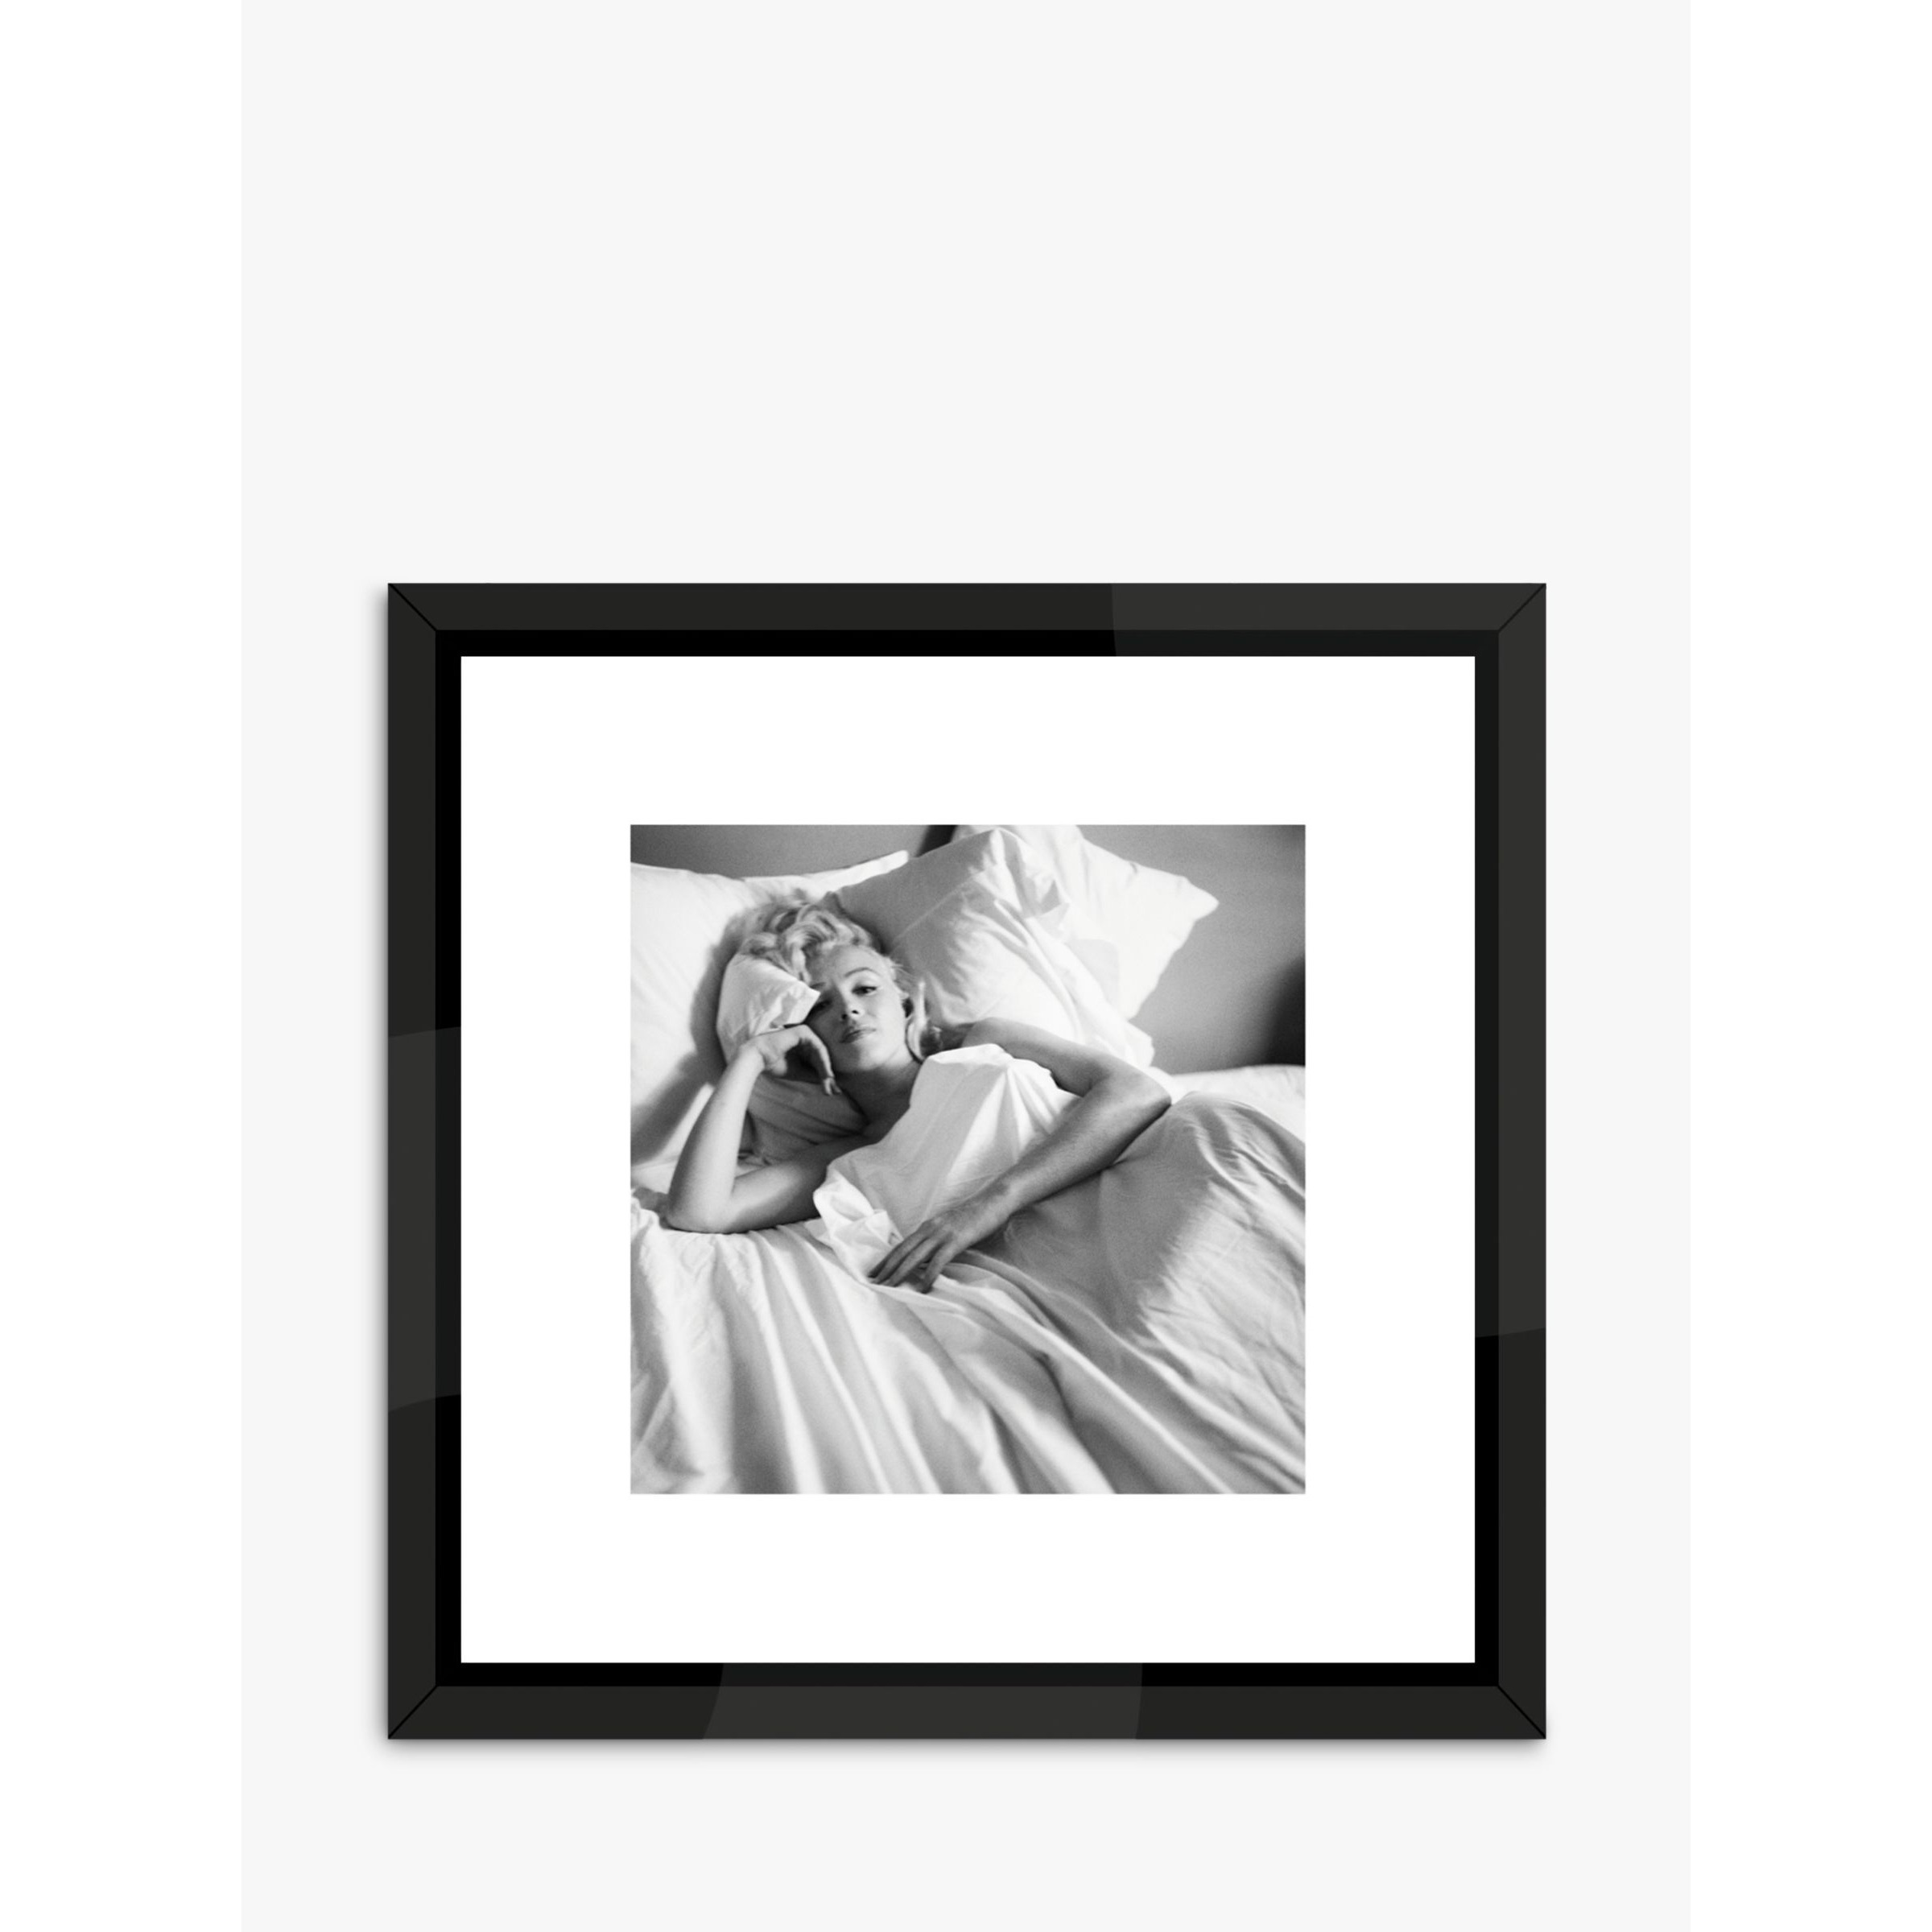 Marilyn Monroe In Bed - Framed Print & Mount, 50 x 50cm - image 1